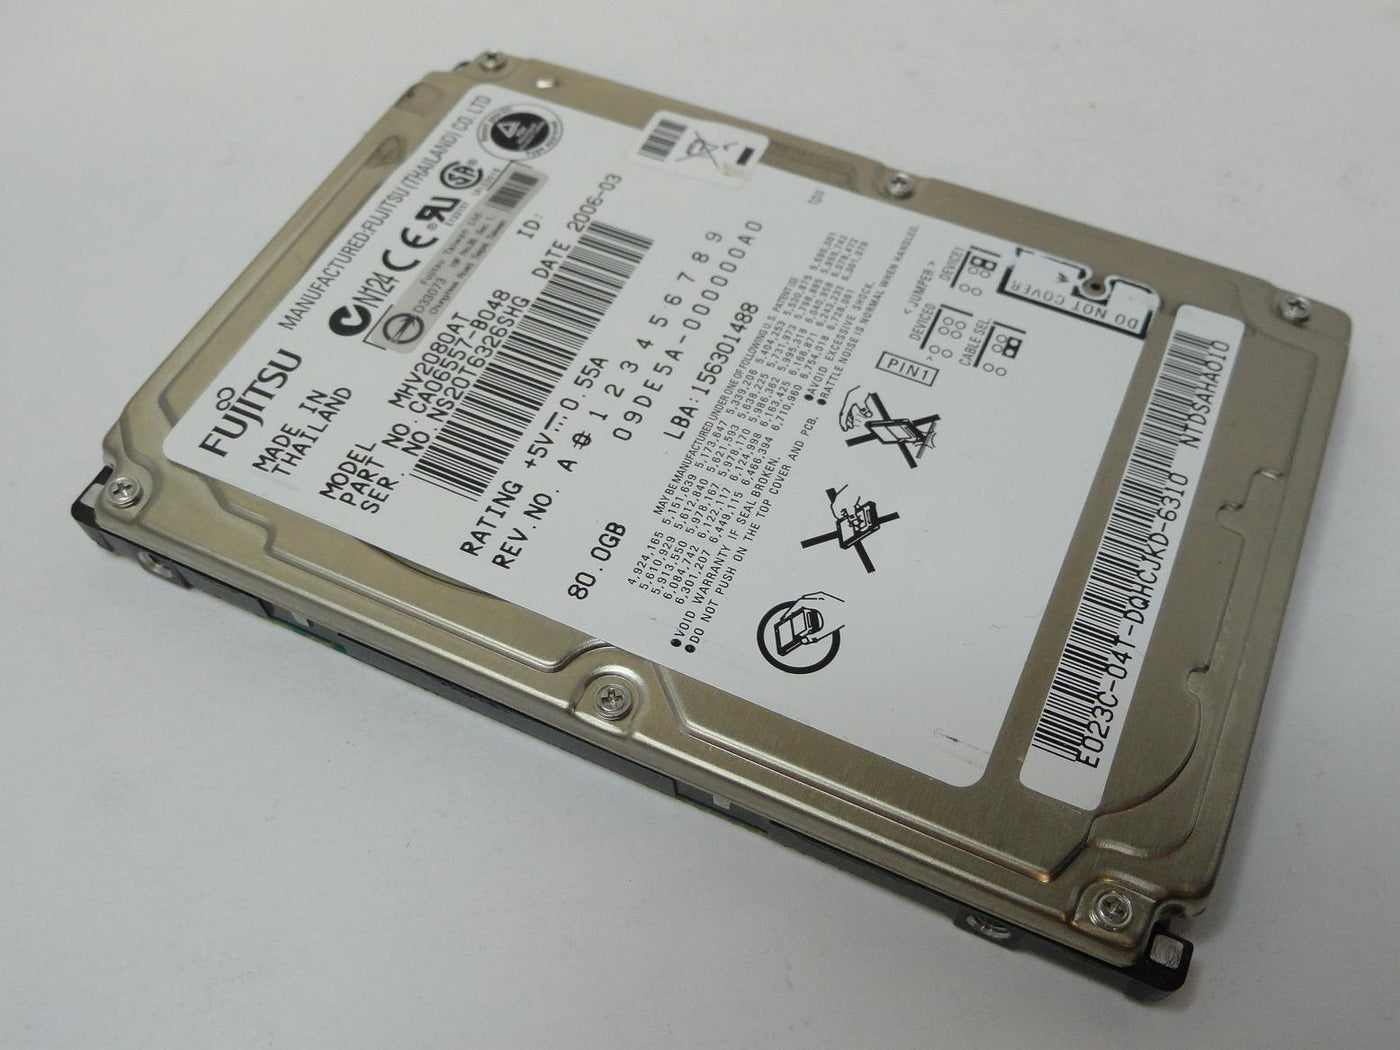 CA06557-B048 - Fujitsu 80GB IDE 4200rpm 2.5in HDD - Refurbished